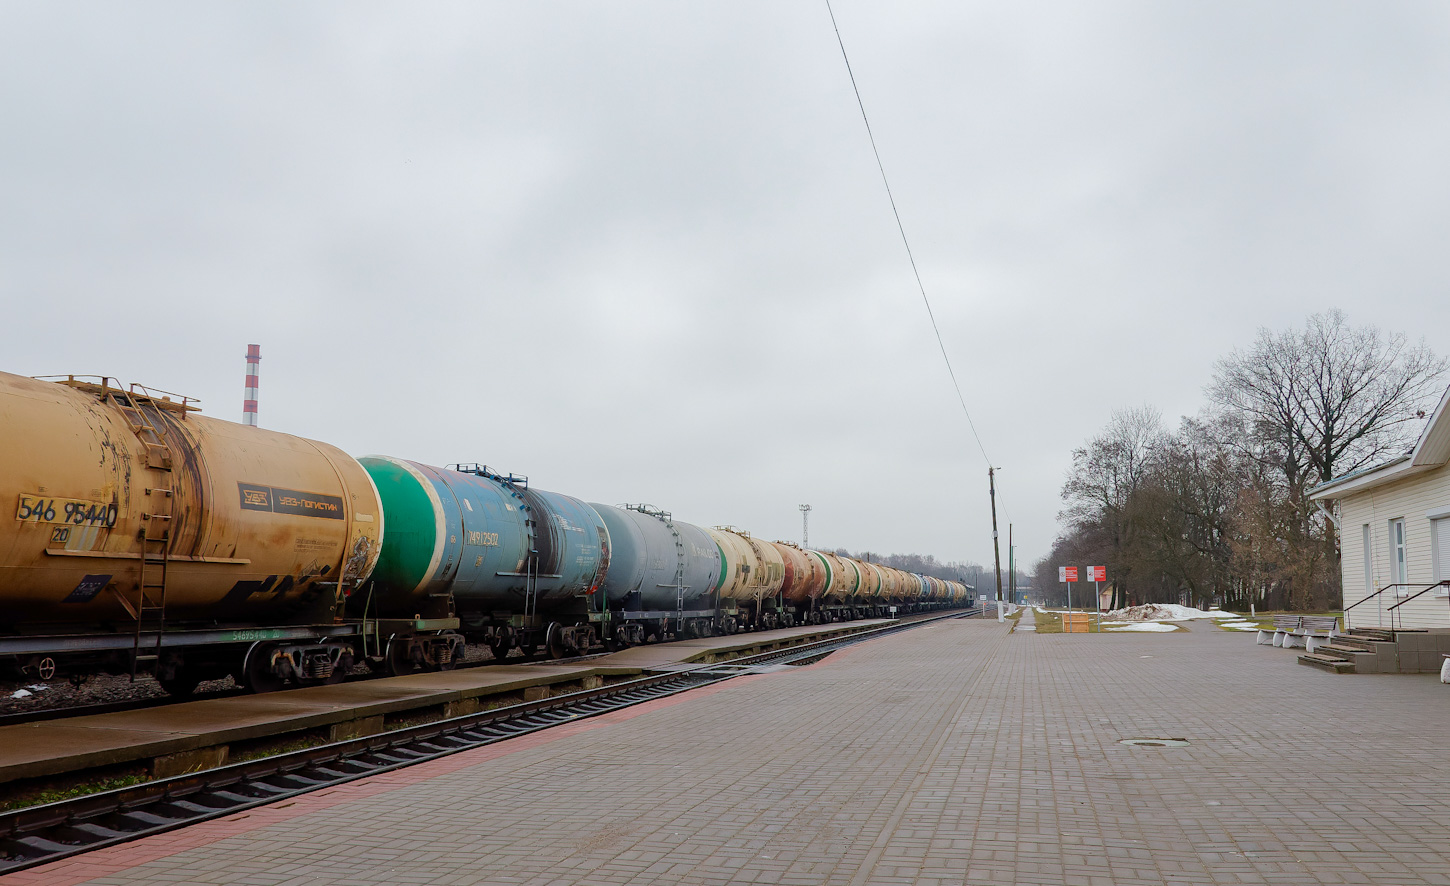 Belarusian Railway — Stations